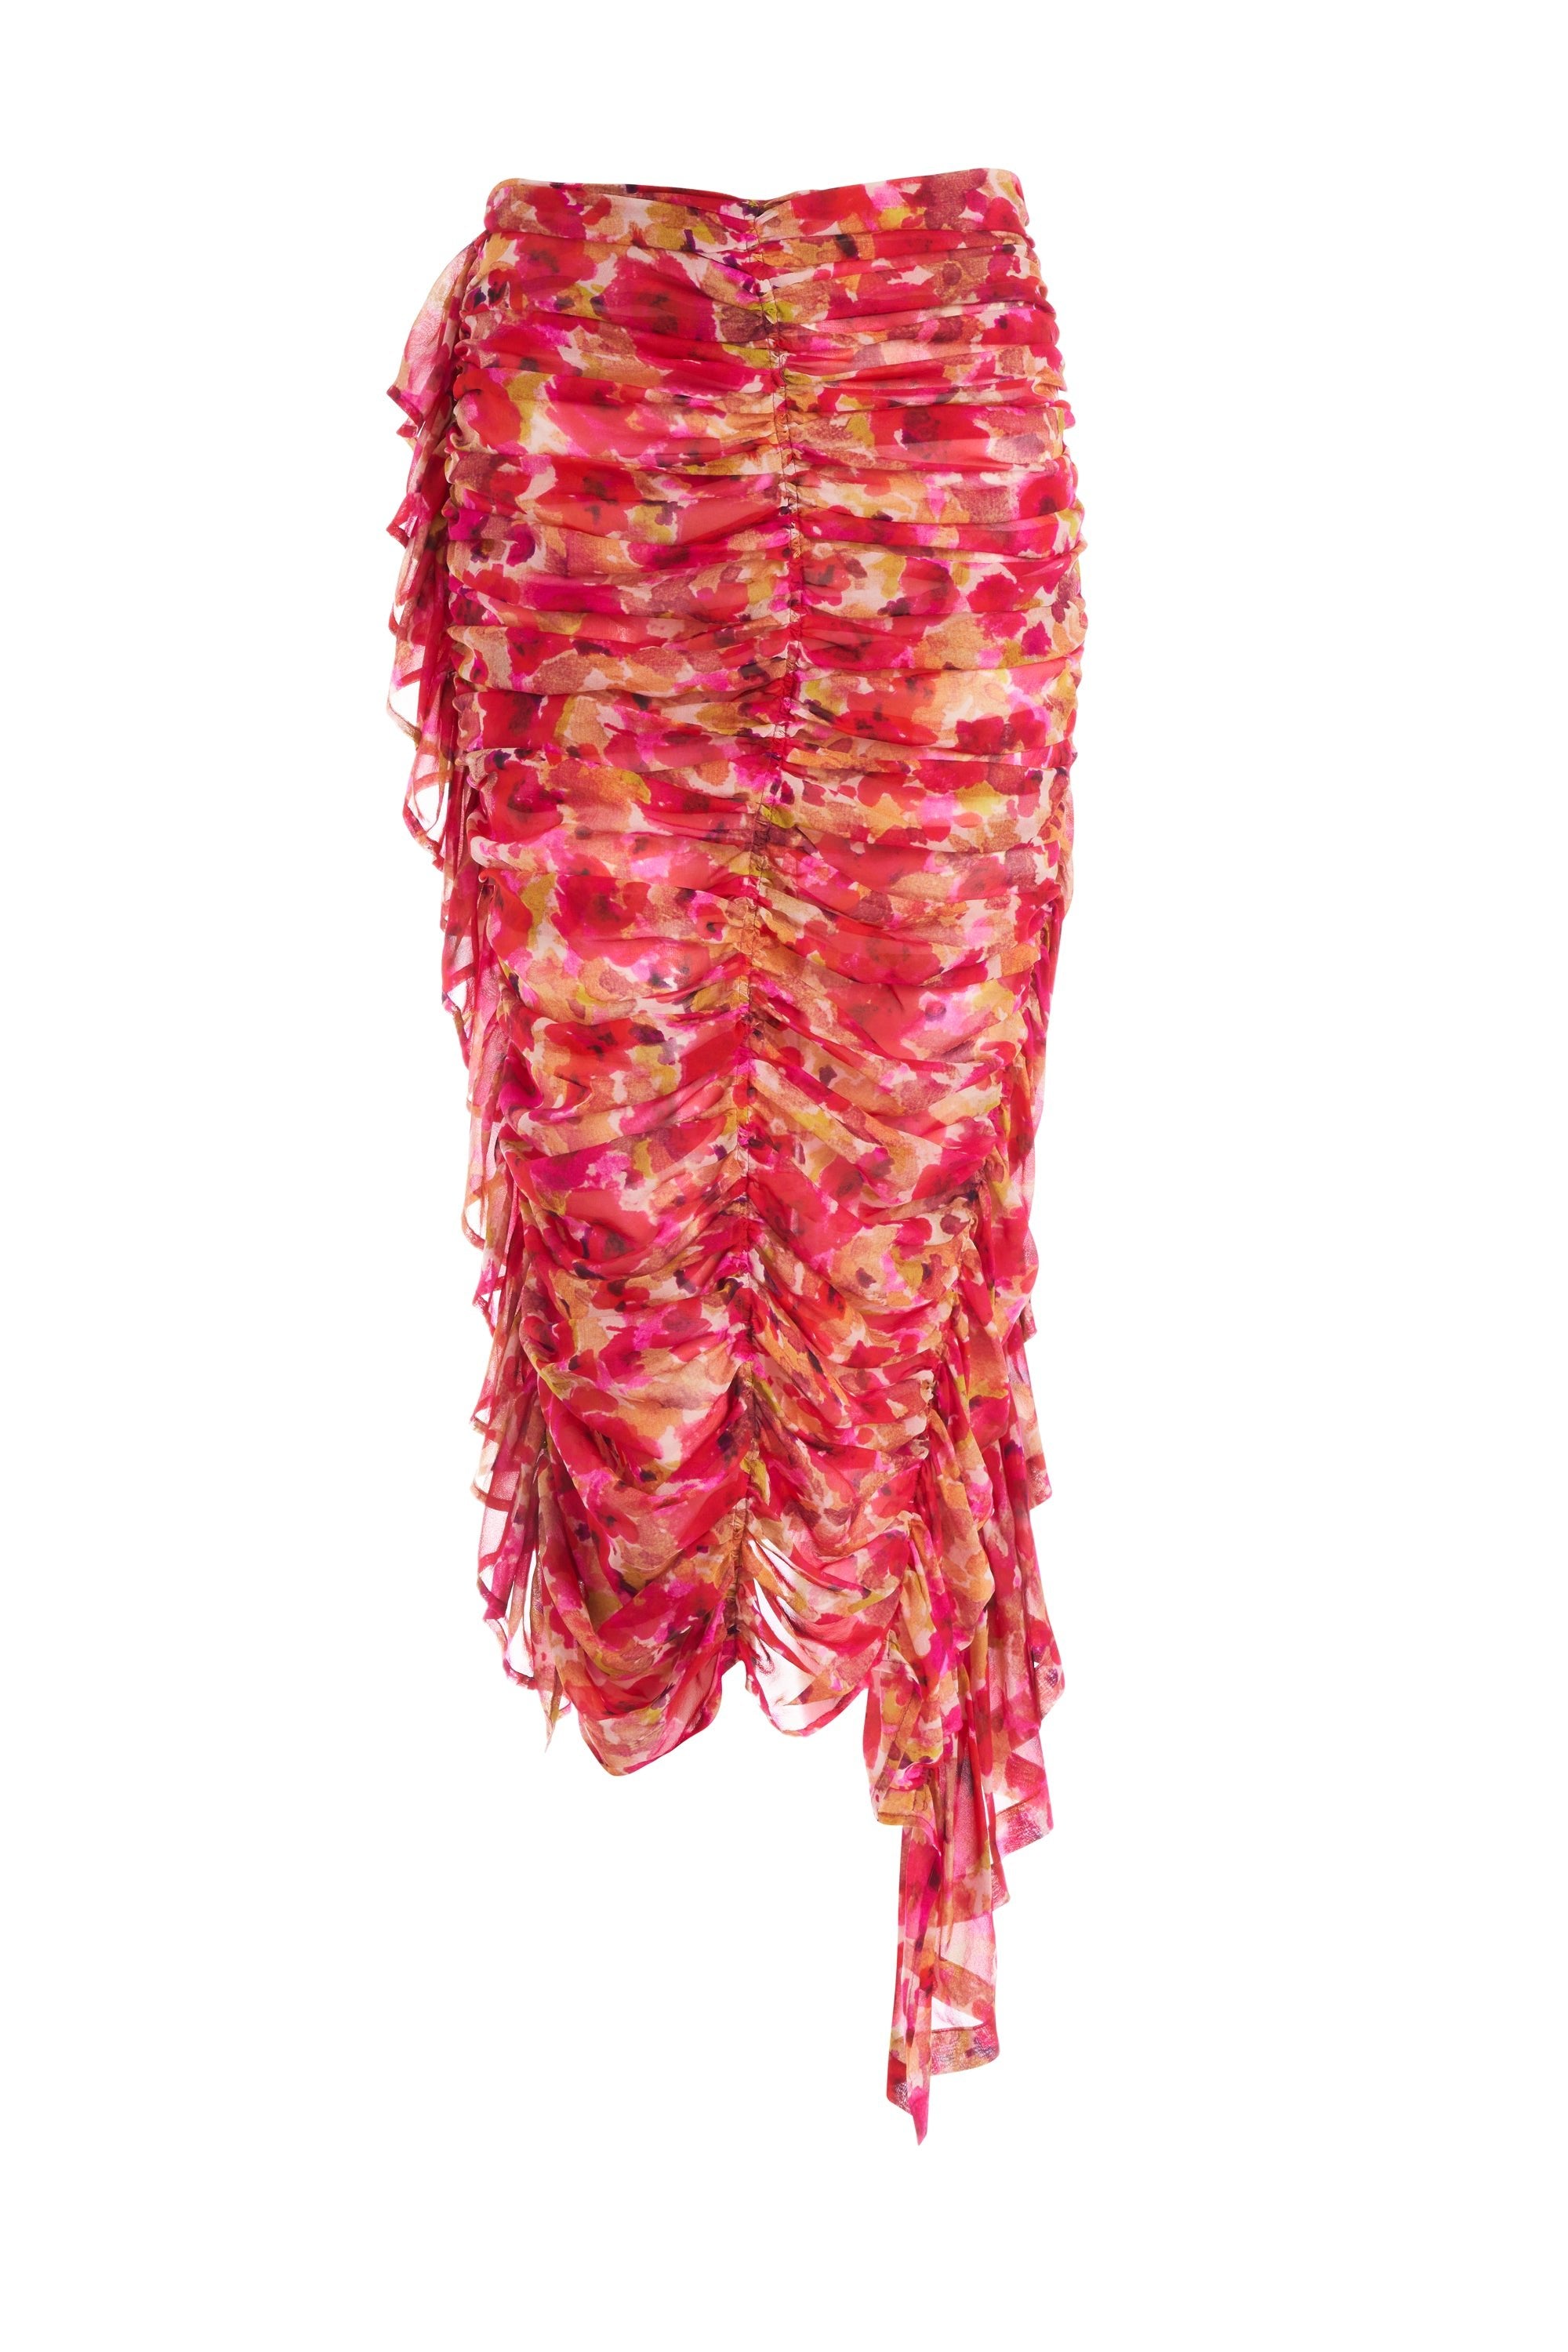 Dries Van Noten Red Ruffled Pencil Skirt - Foxy Couture Carmel